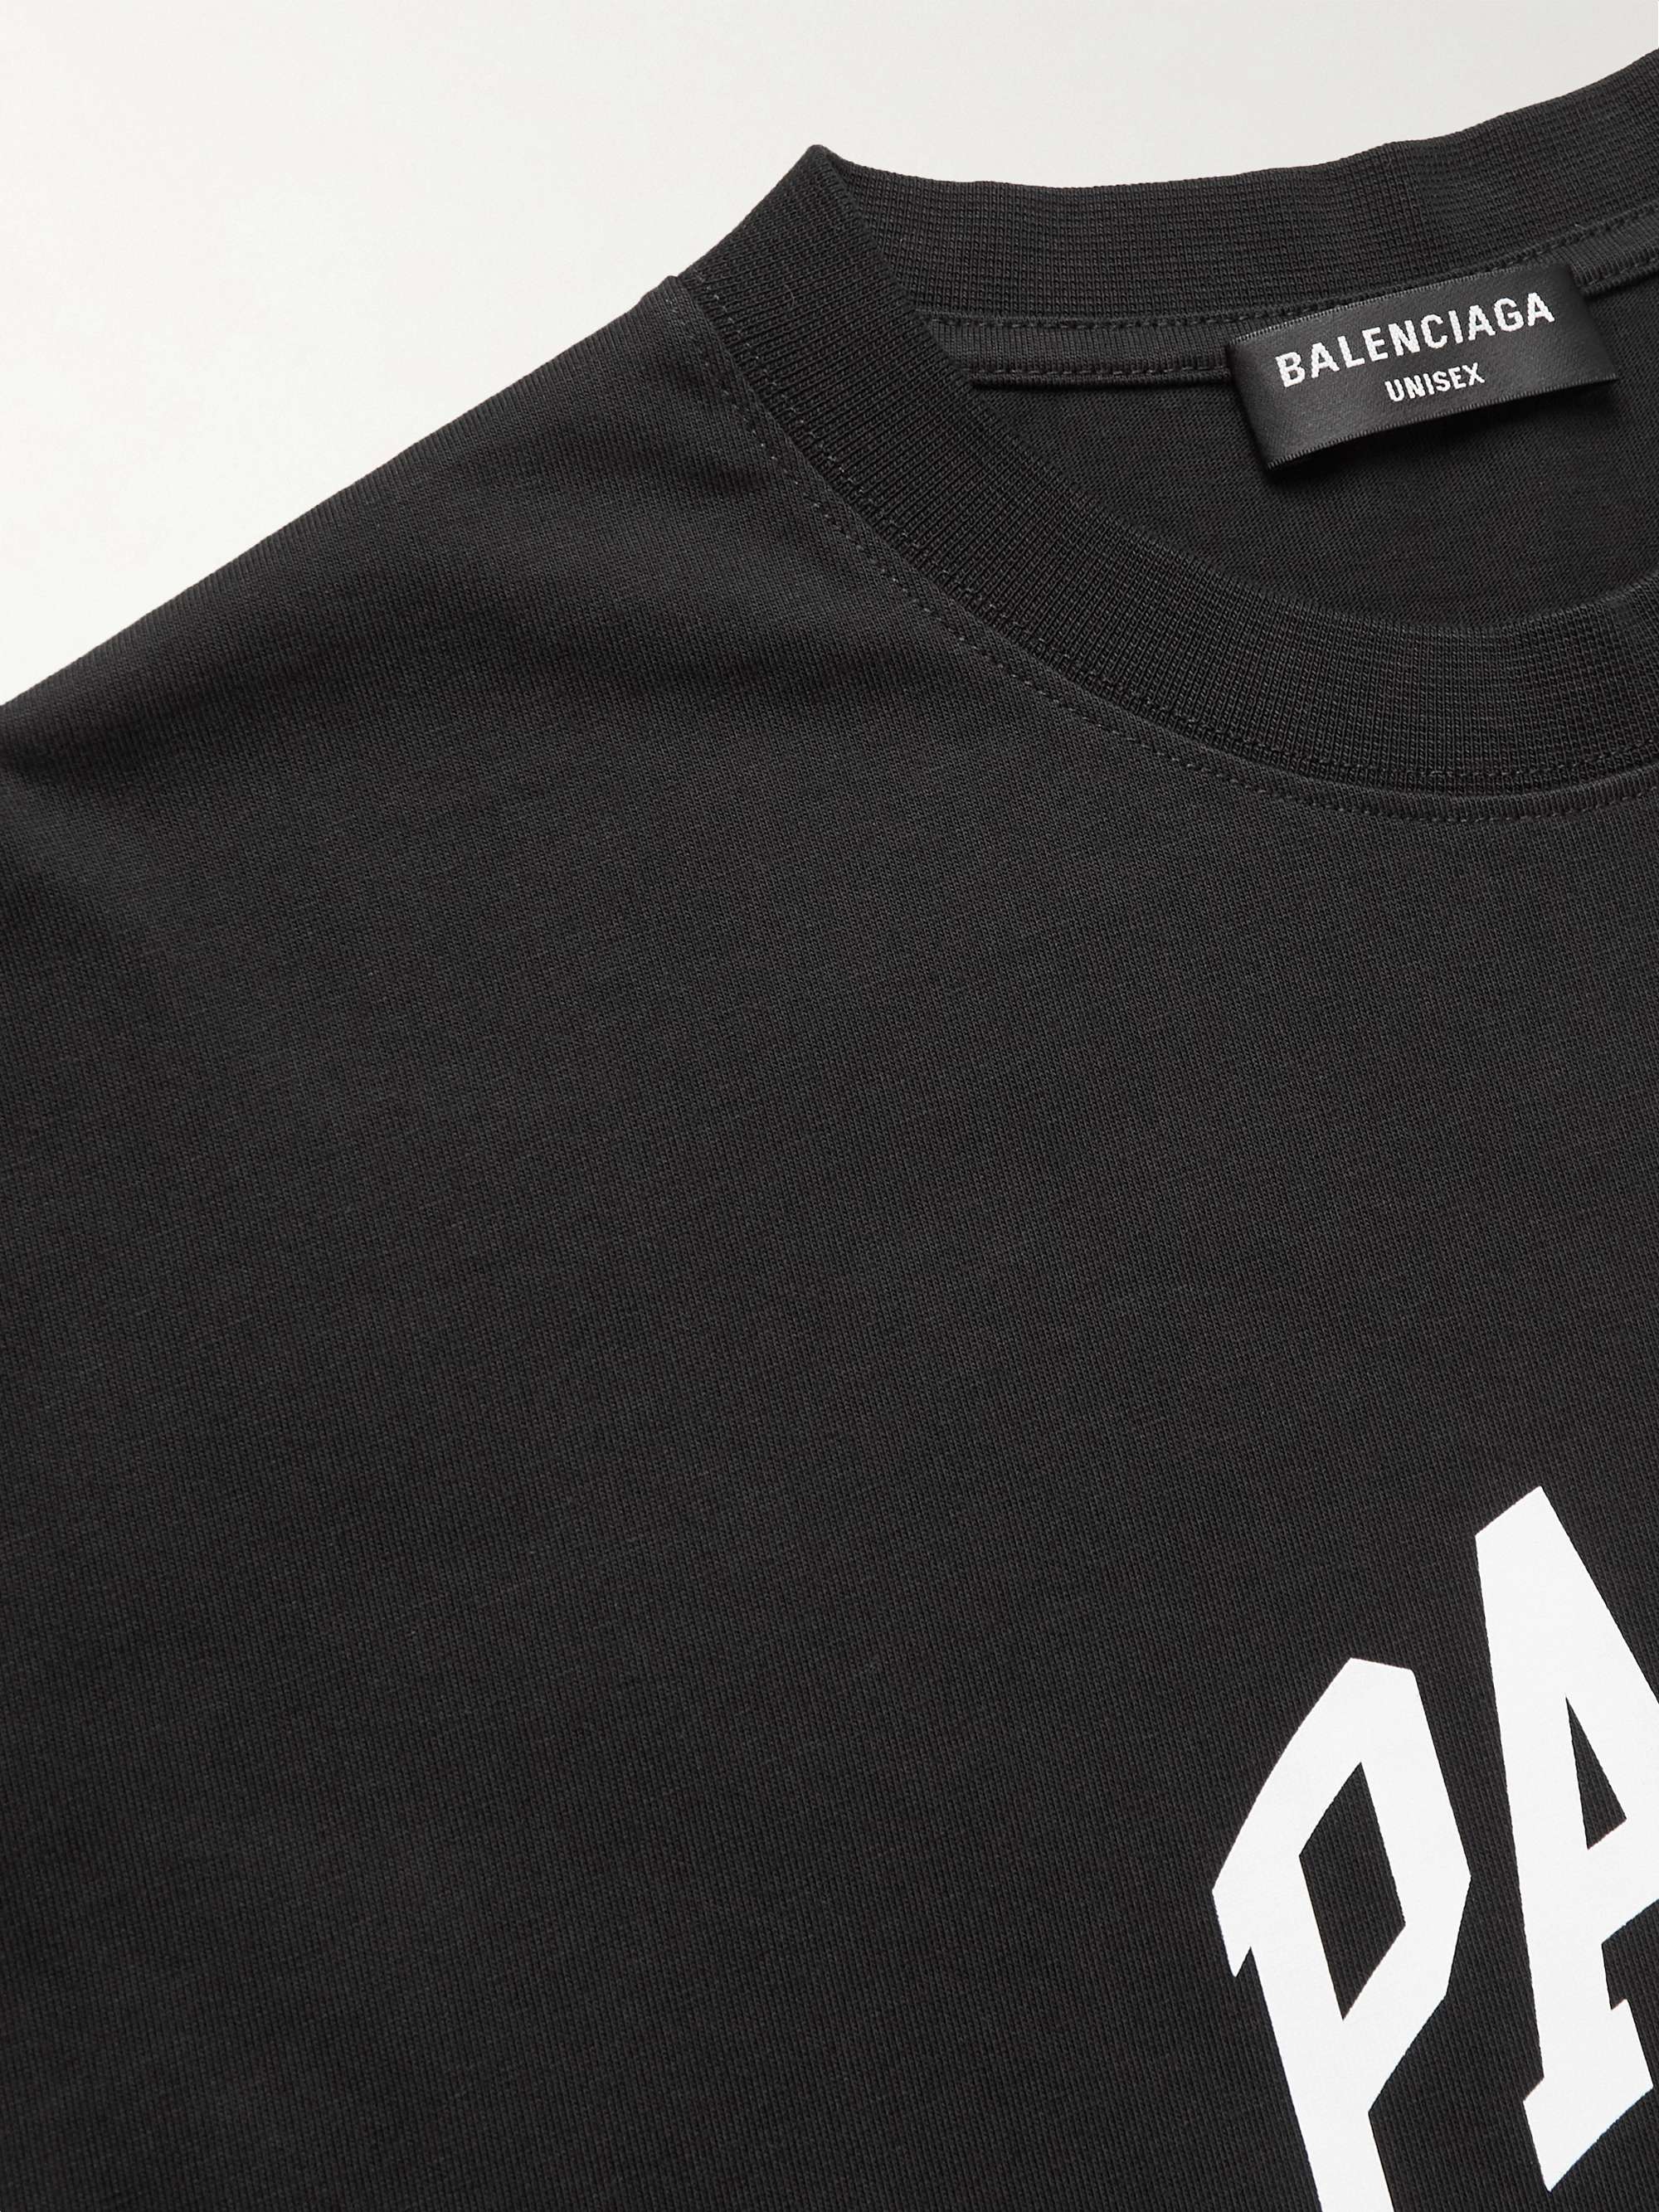 BALENCIAGA Printed Cotton-Jersey T-Shirt